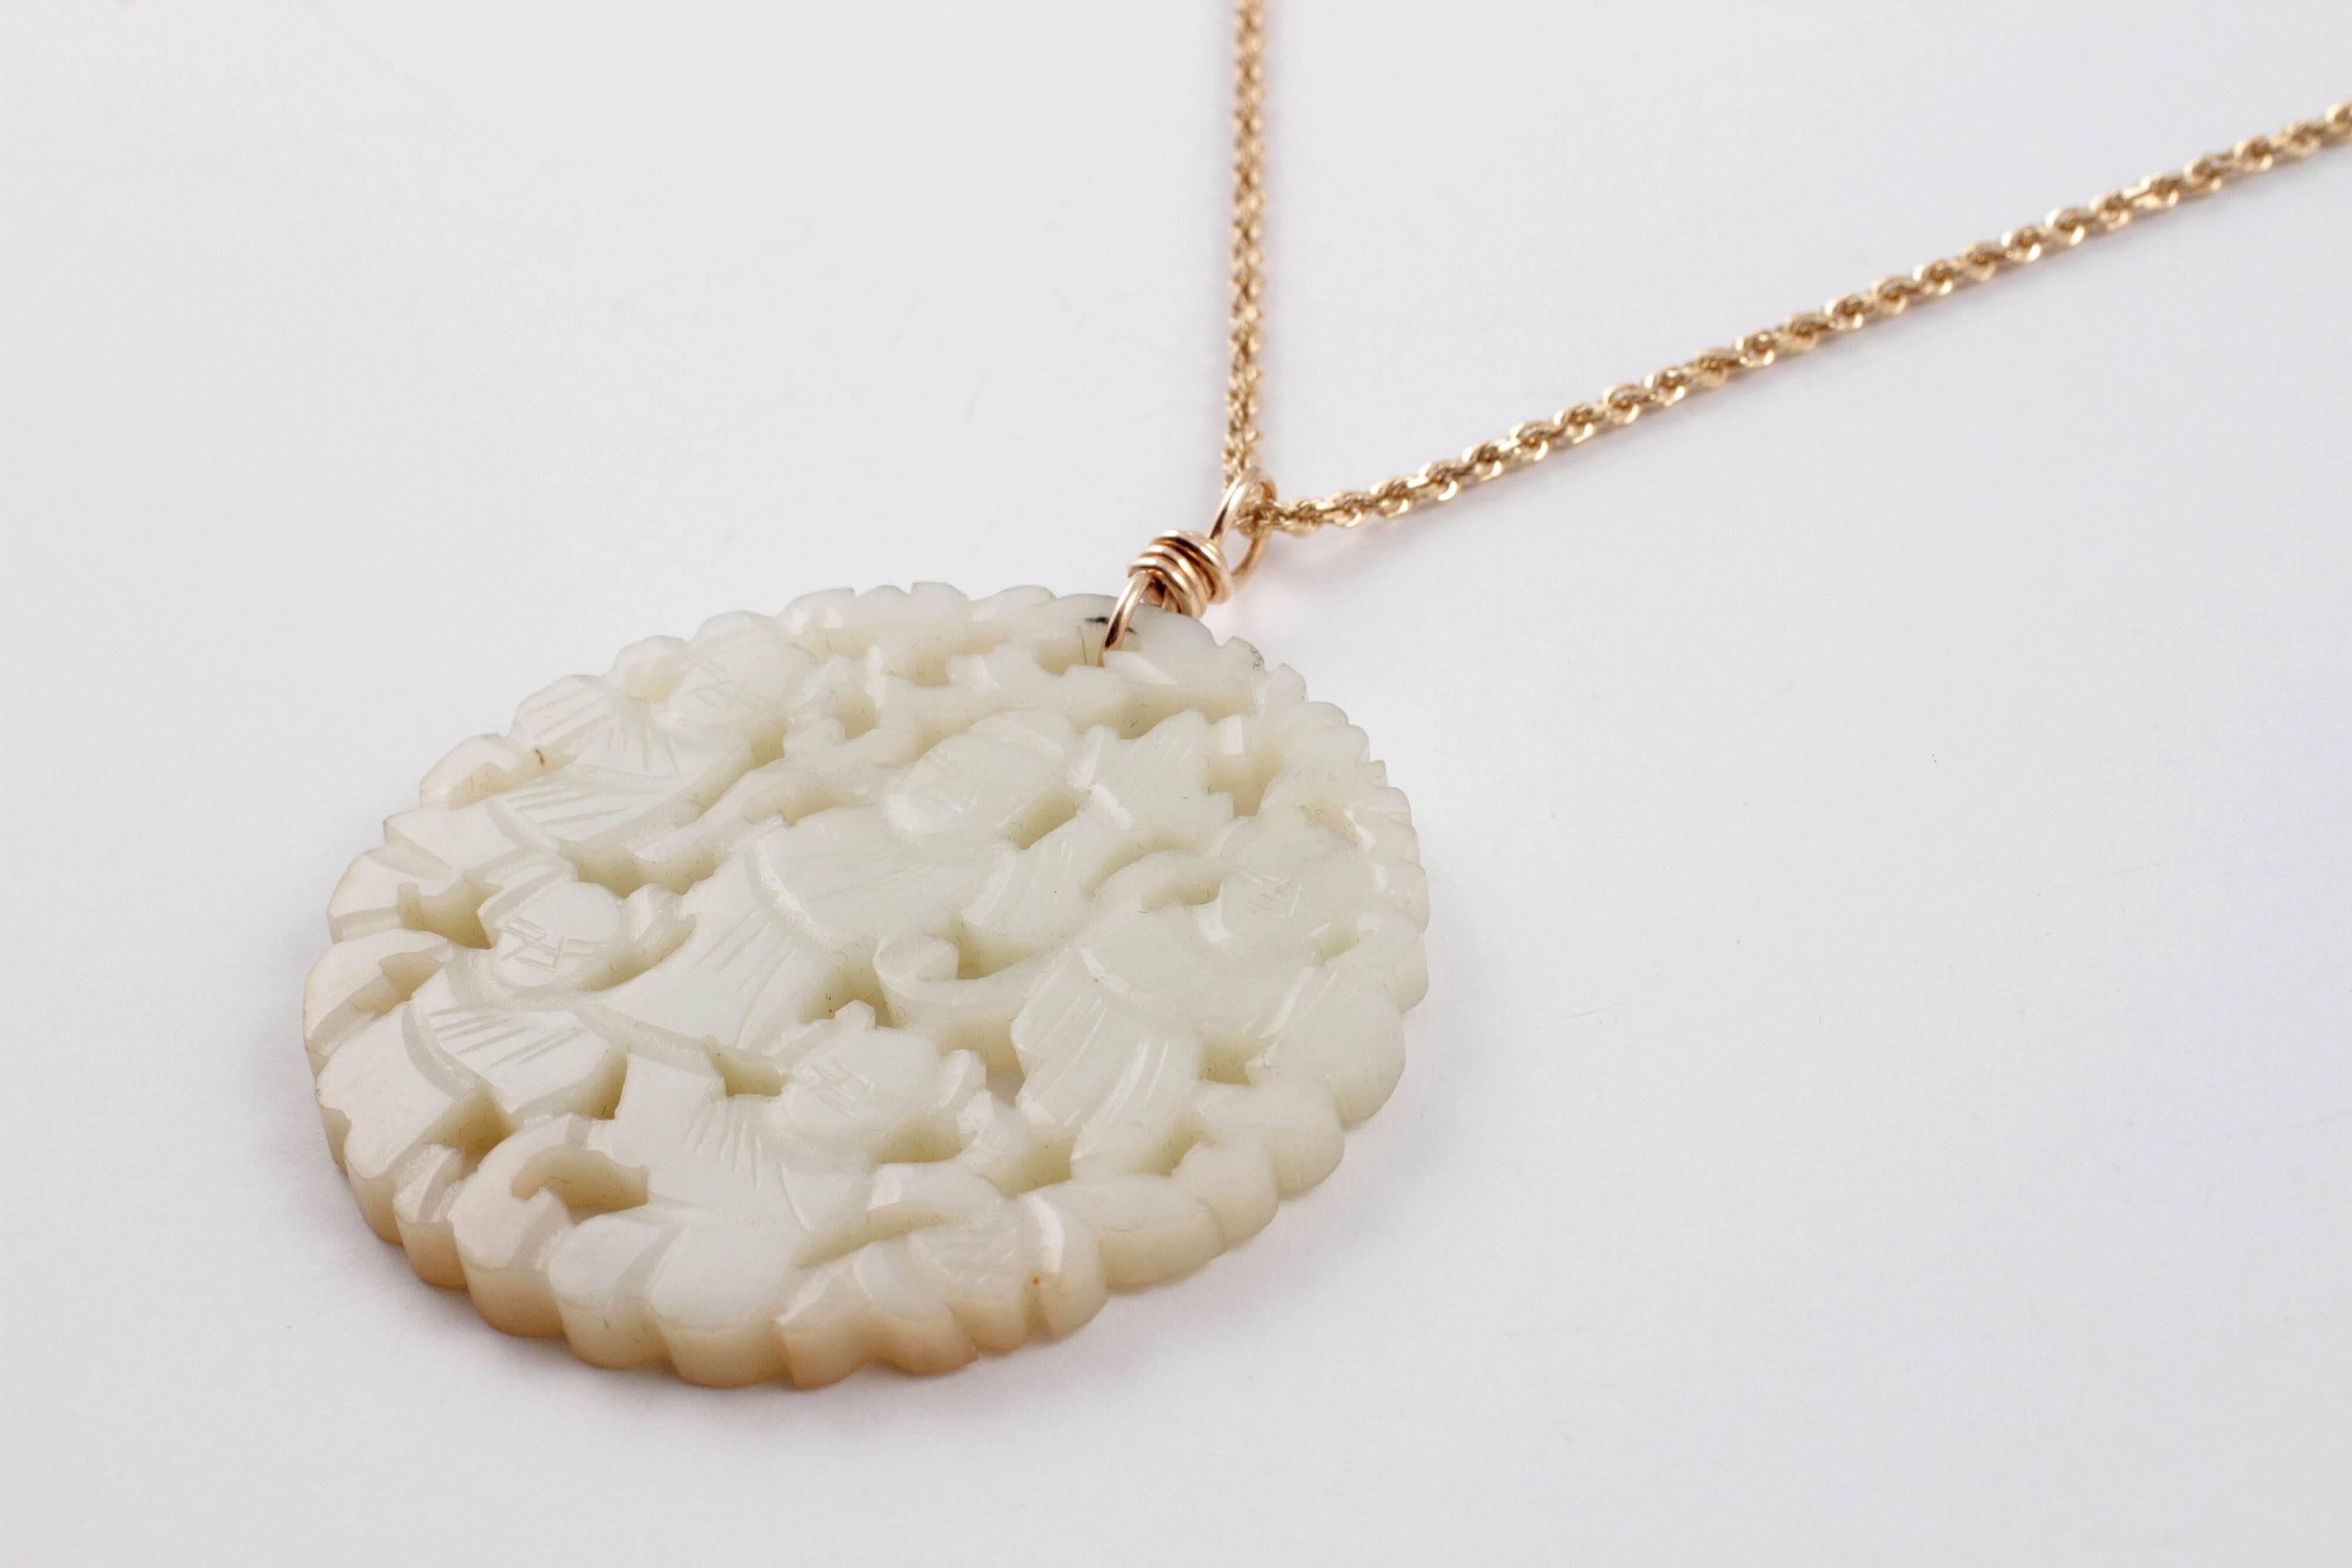 Women's or Men's Carved Nephrite Jade Necklace in 14 Karat Gold